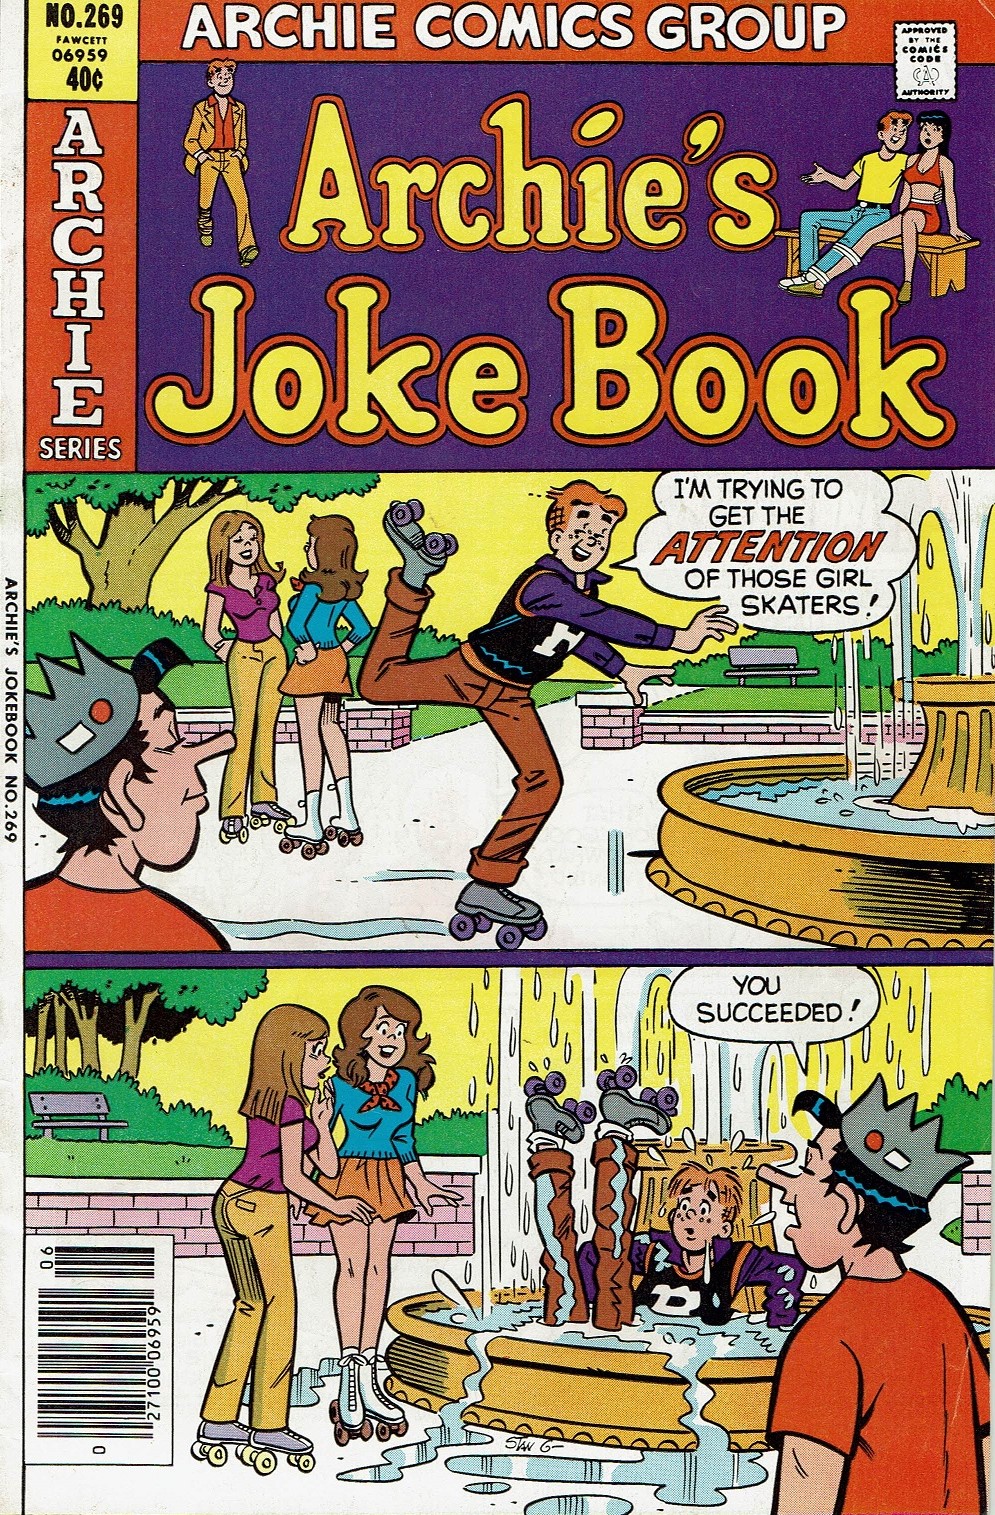 Archie's Joke Book Magazine issue 269 - Page 1